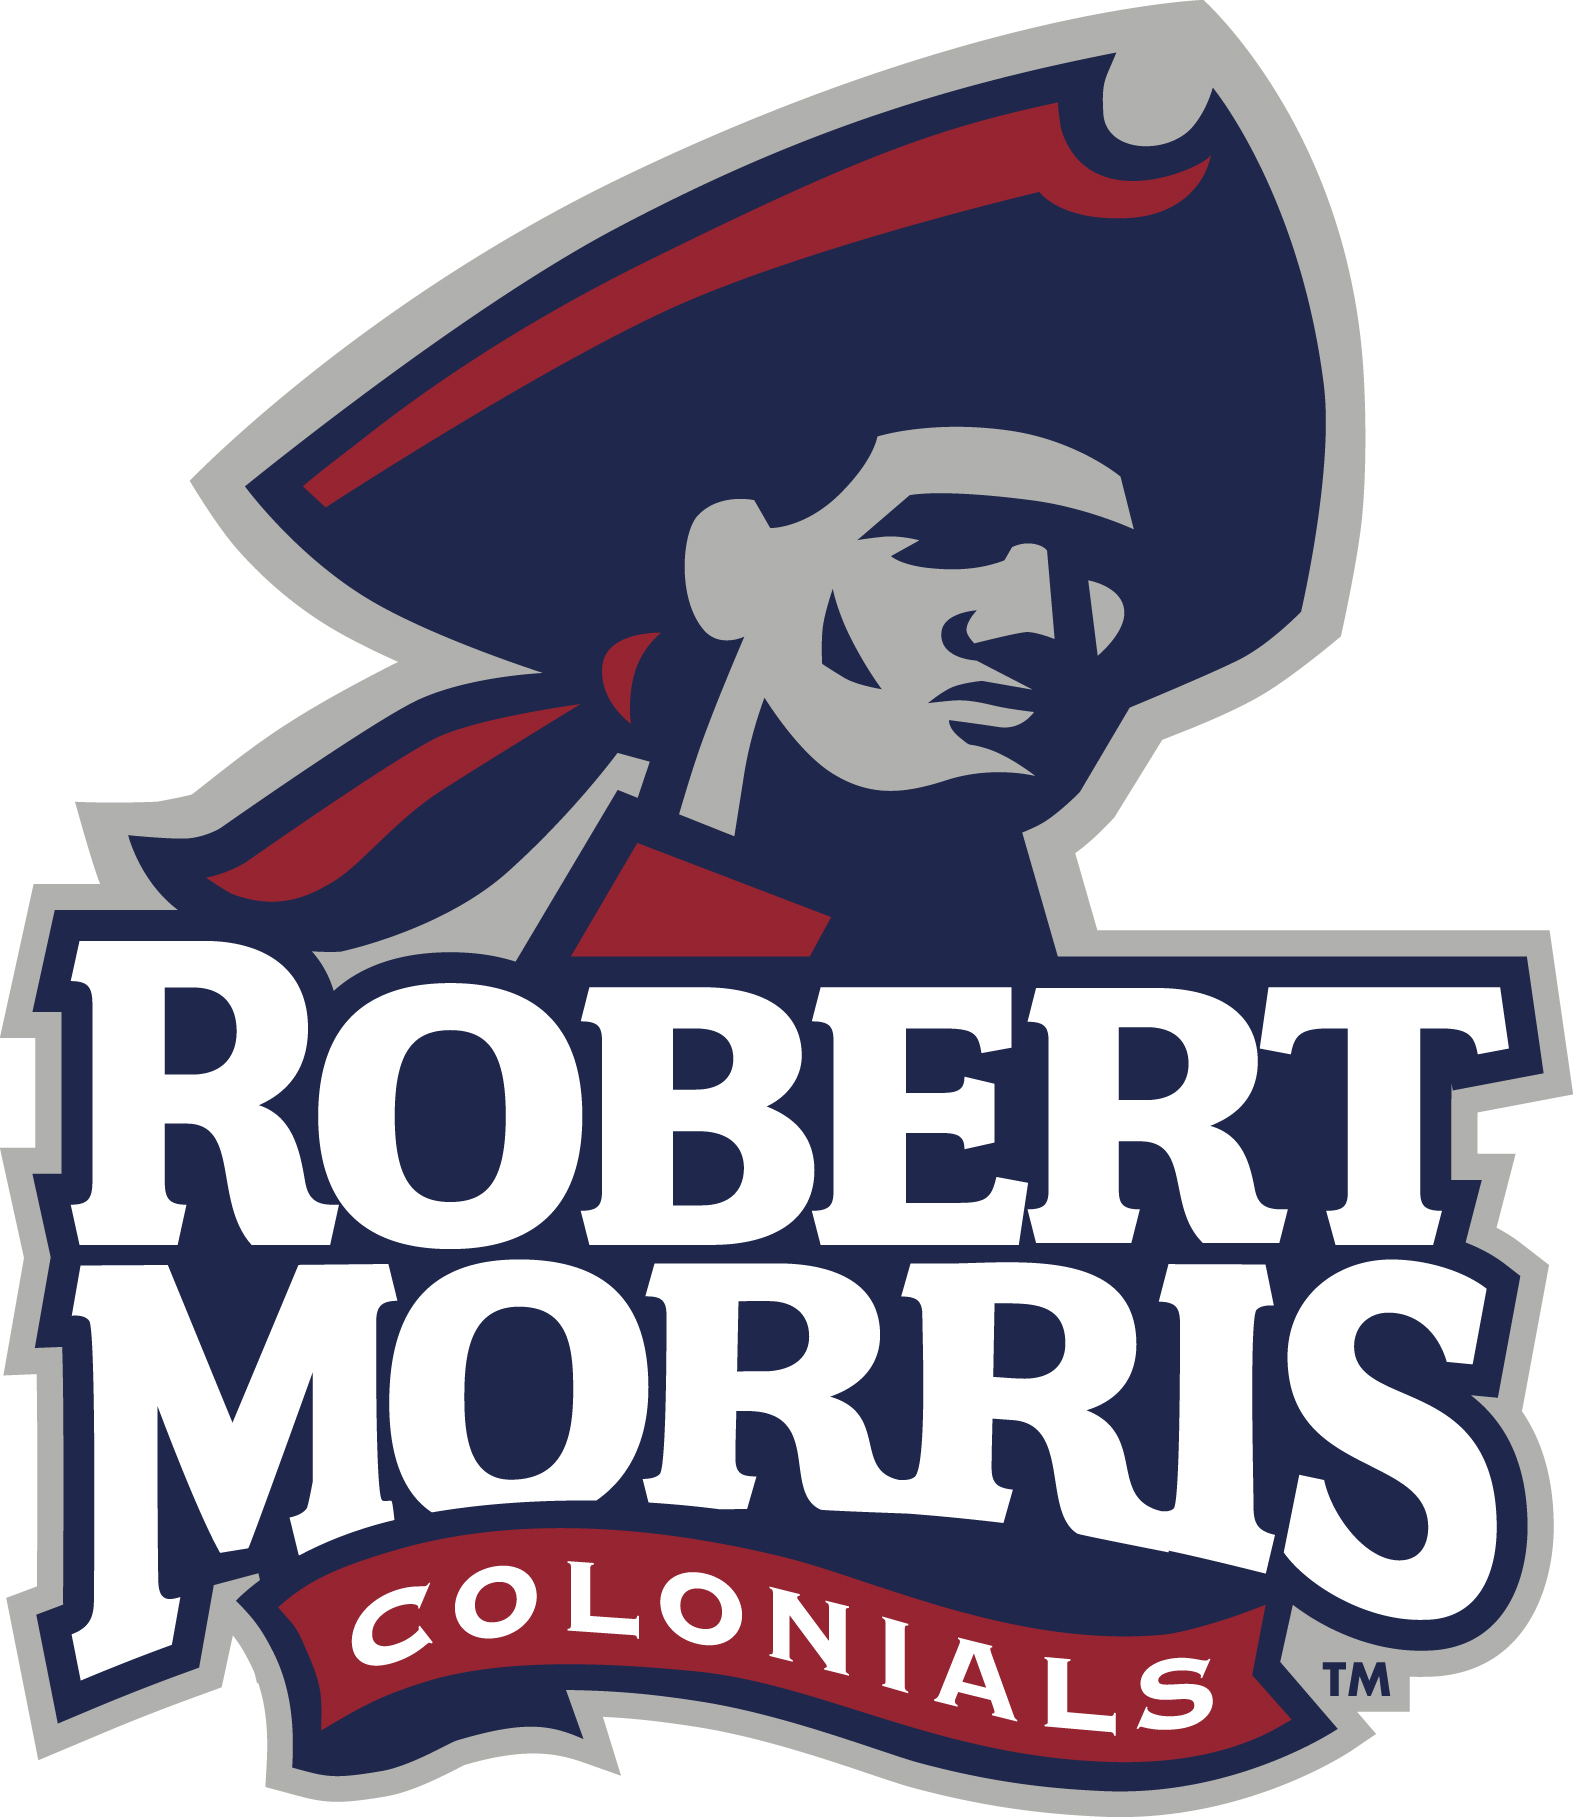 Robert Morris NCAA betting